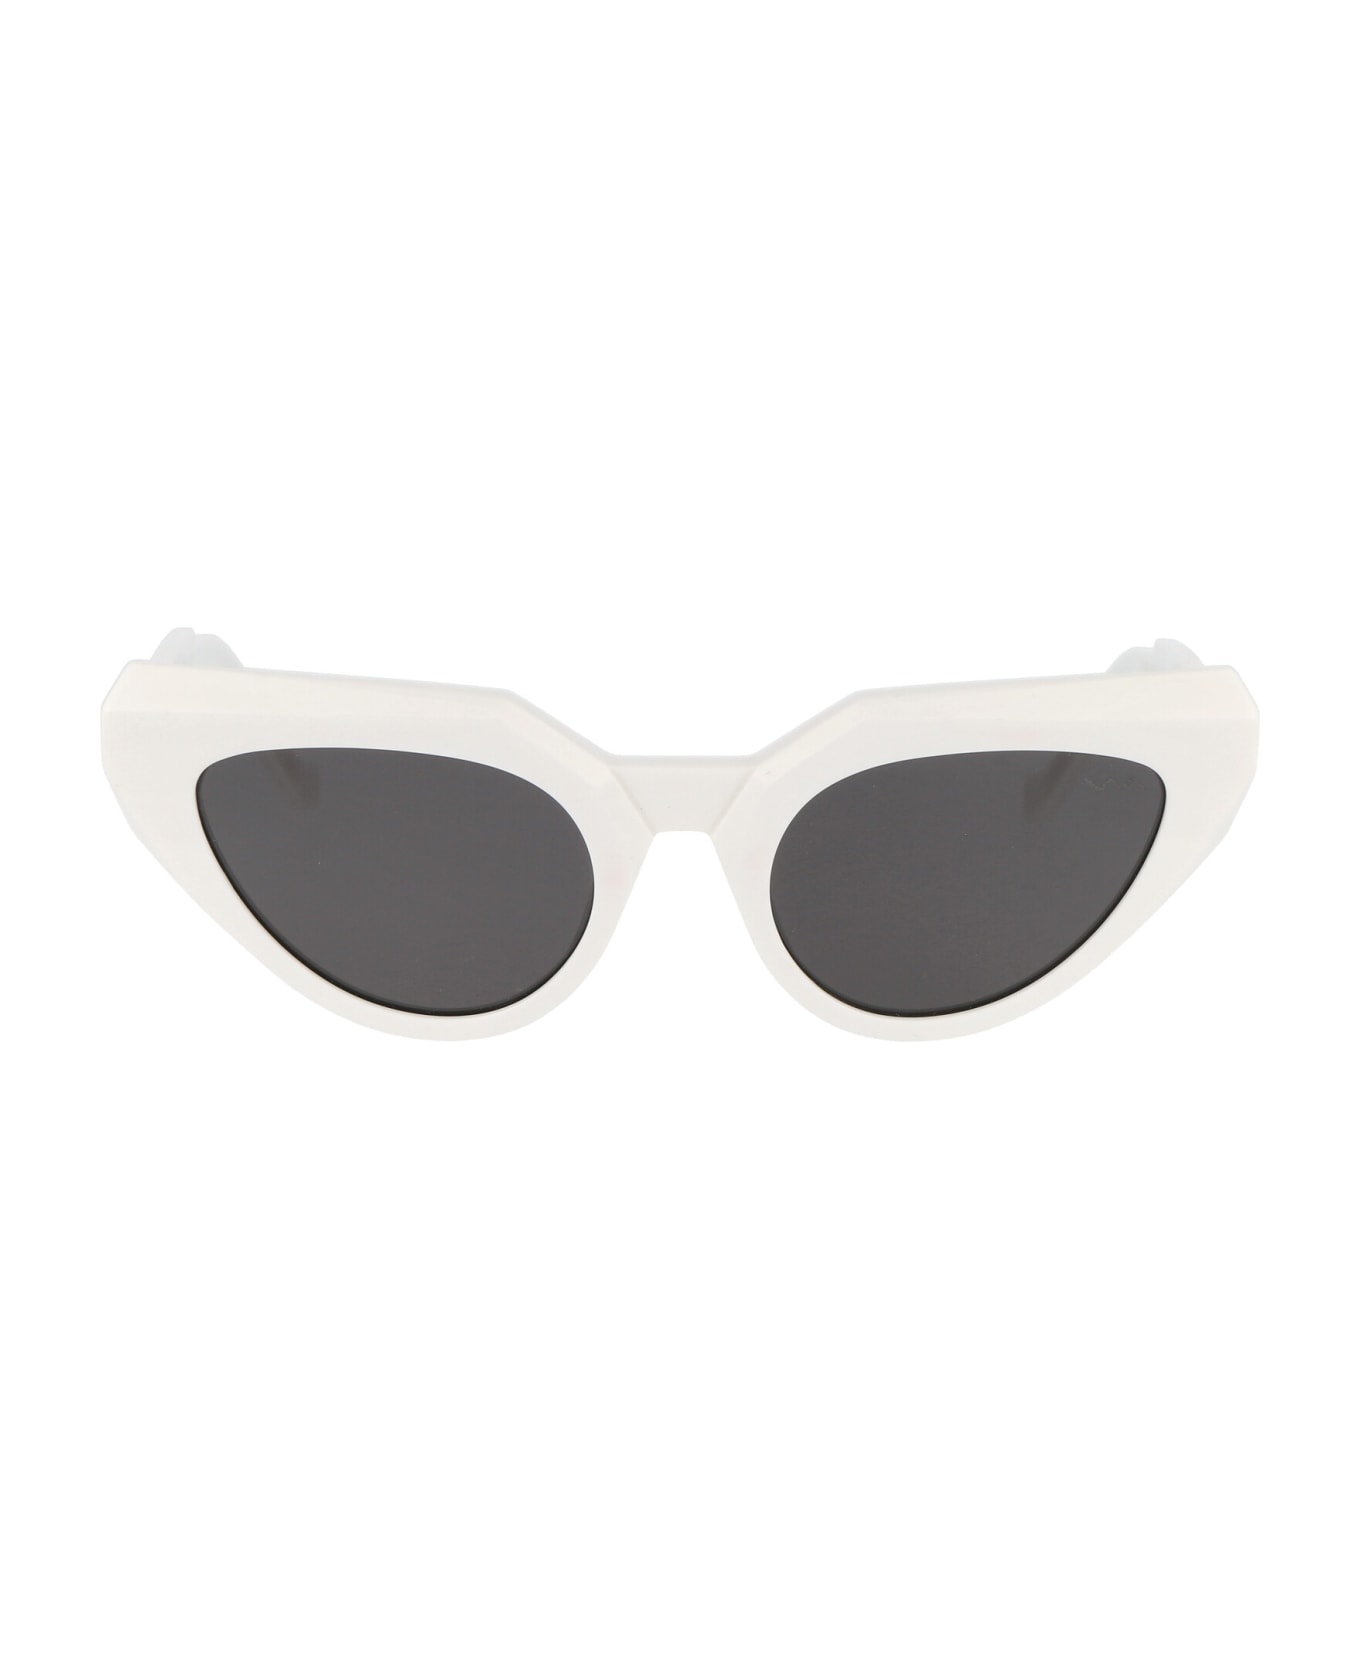 VAVA Bl0028 Sunglasses - WHITE|BLACK FLEX HINGES|BLACK LENSES サングラス